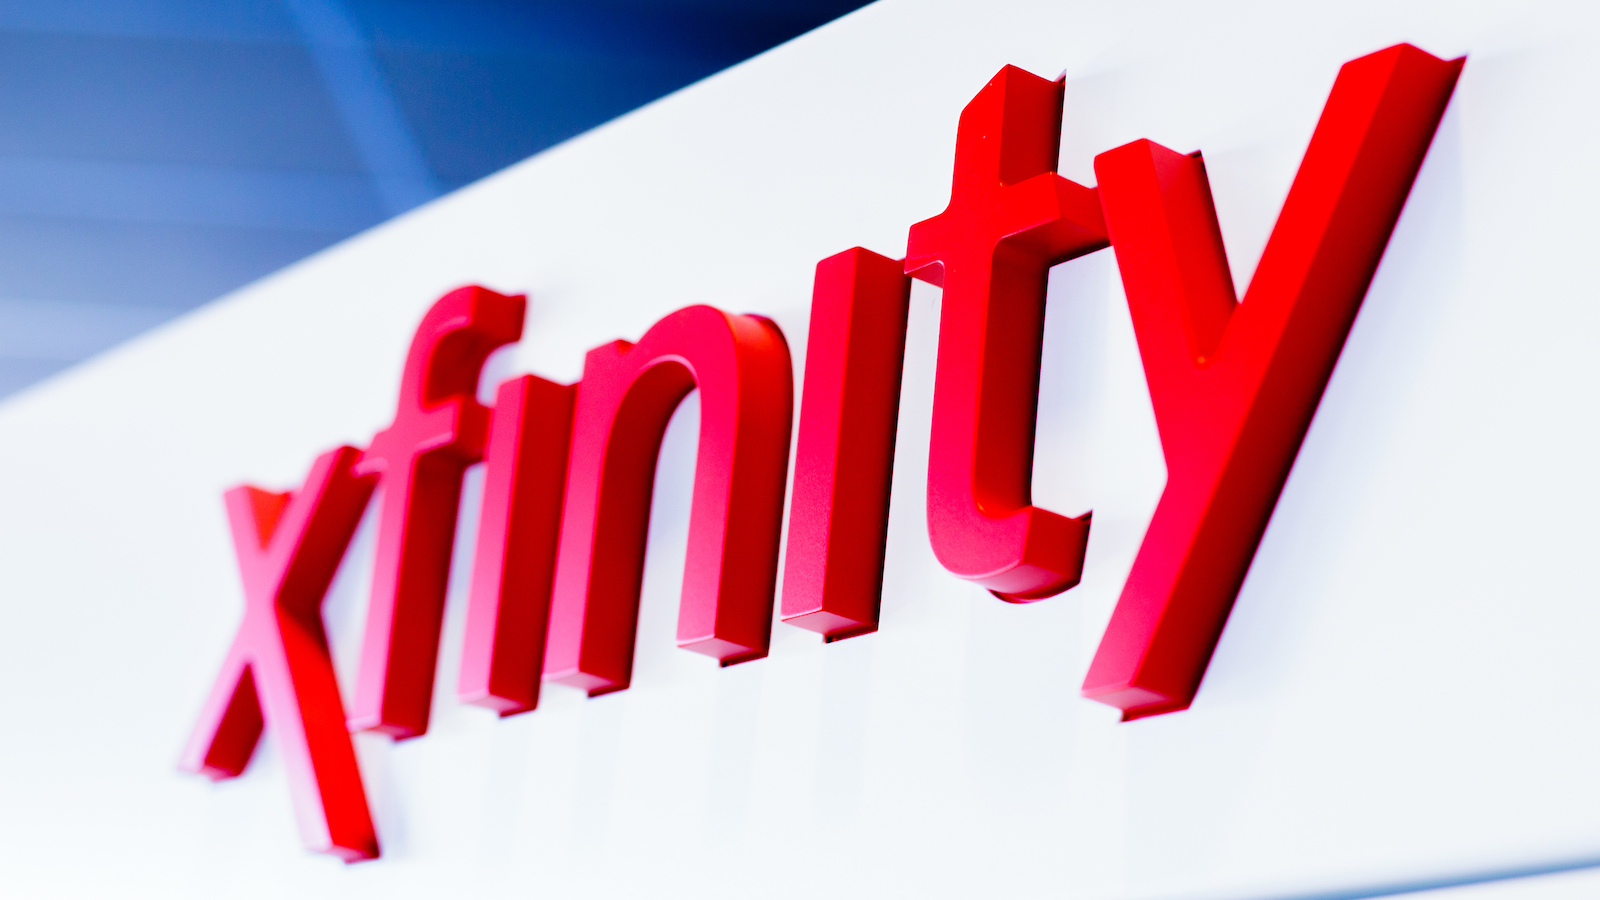 The Xfinity logo.